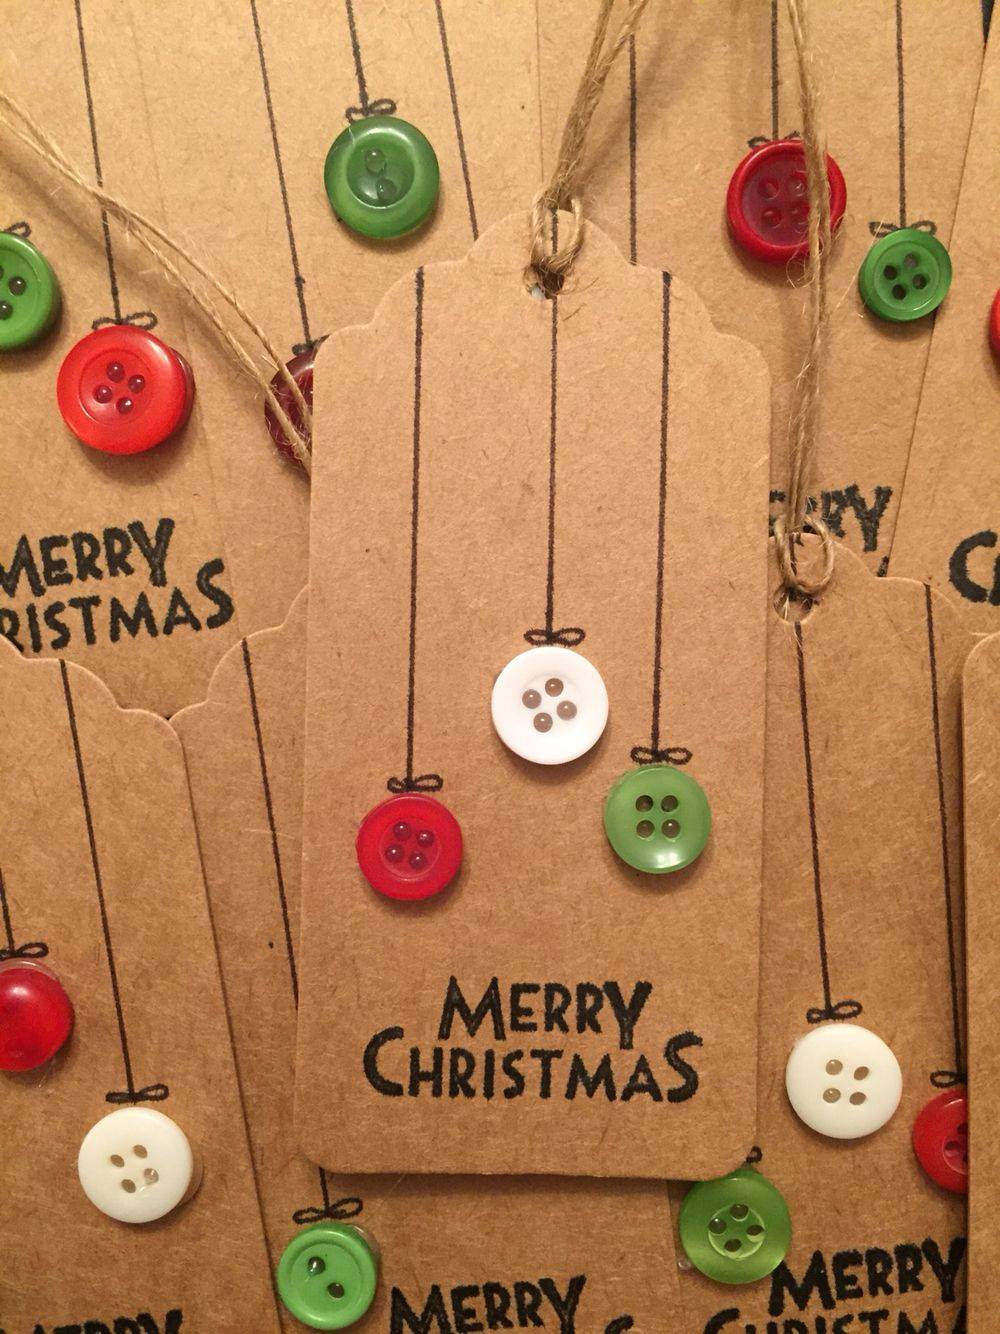 Felicitación navideña hecha con una etiqueta de cartón decorada con botones